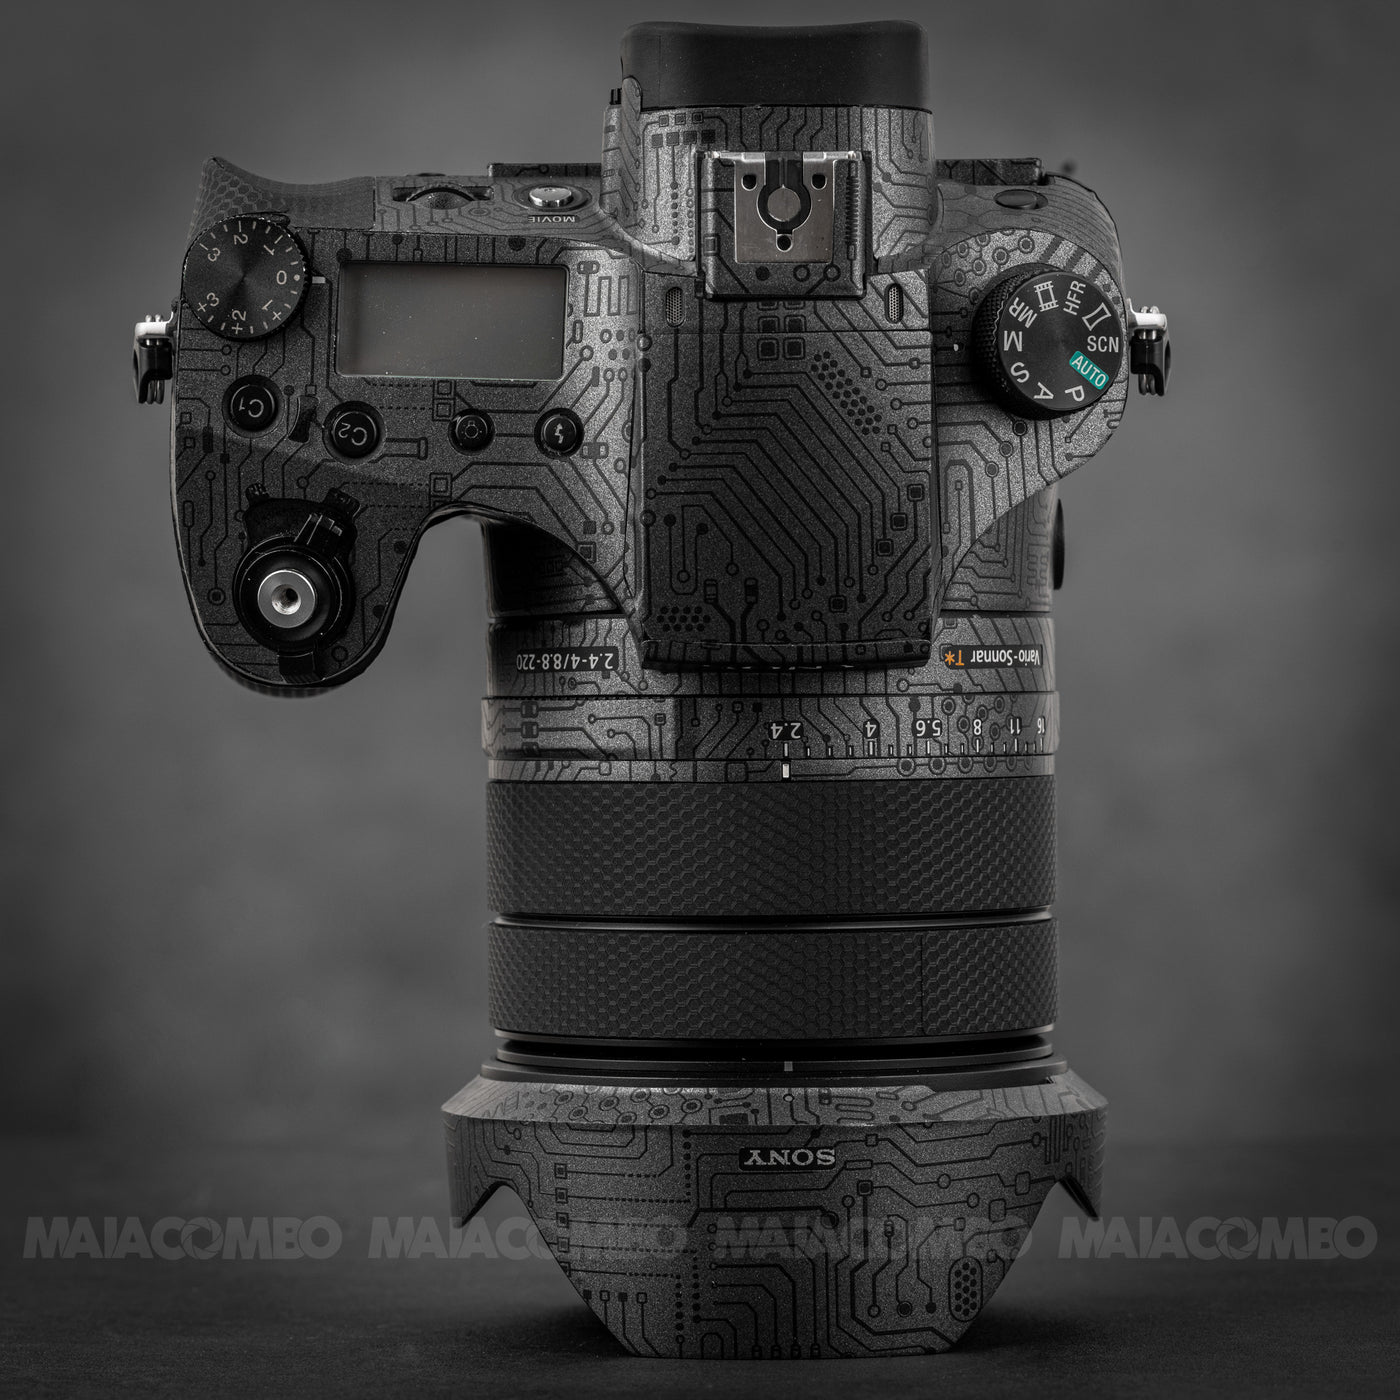 SONY RX10 IV M4 Camera Skin